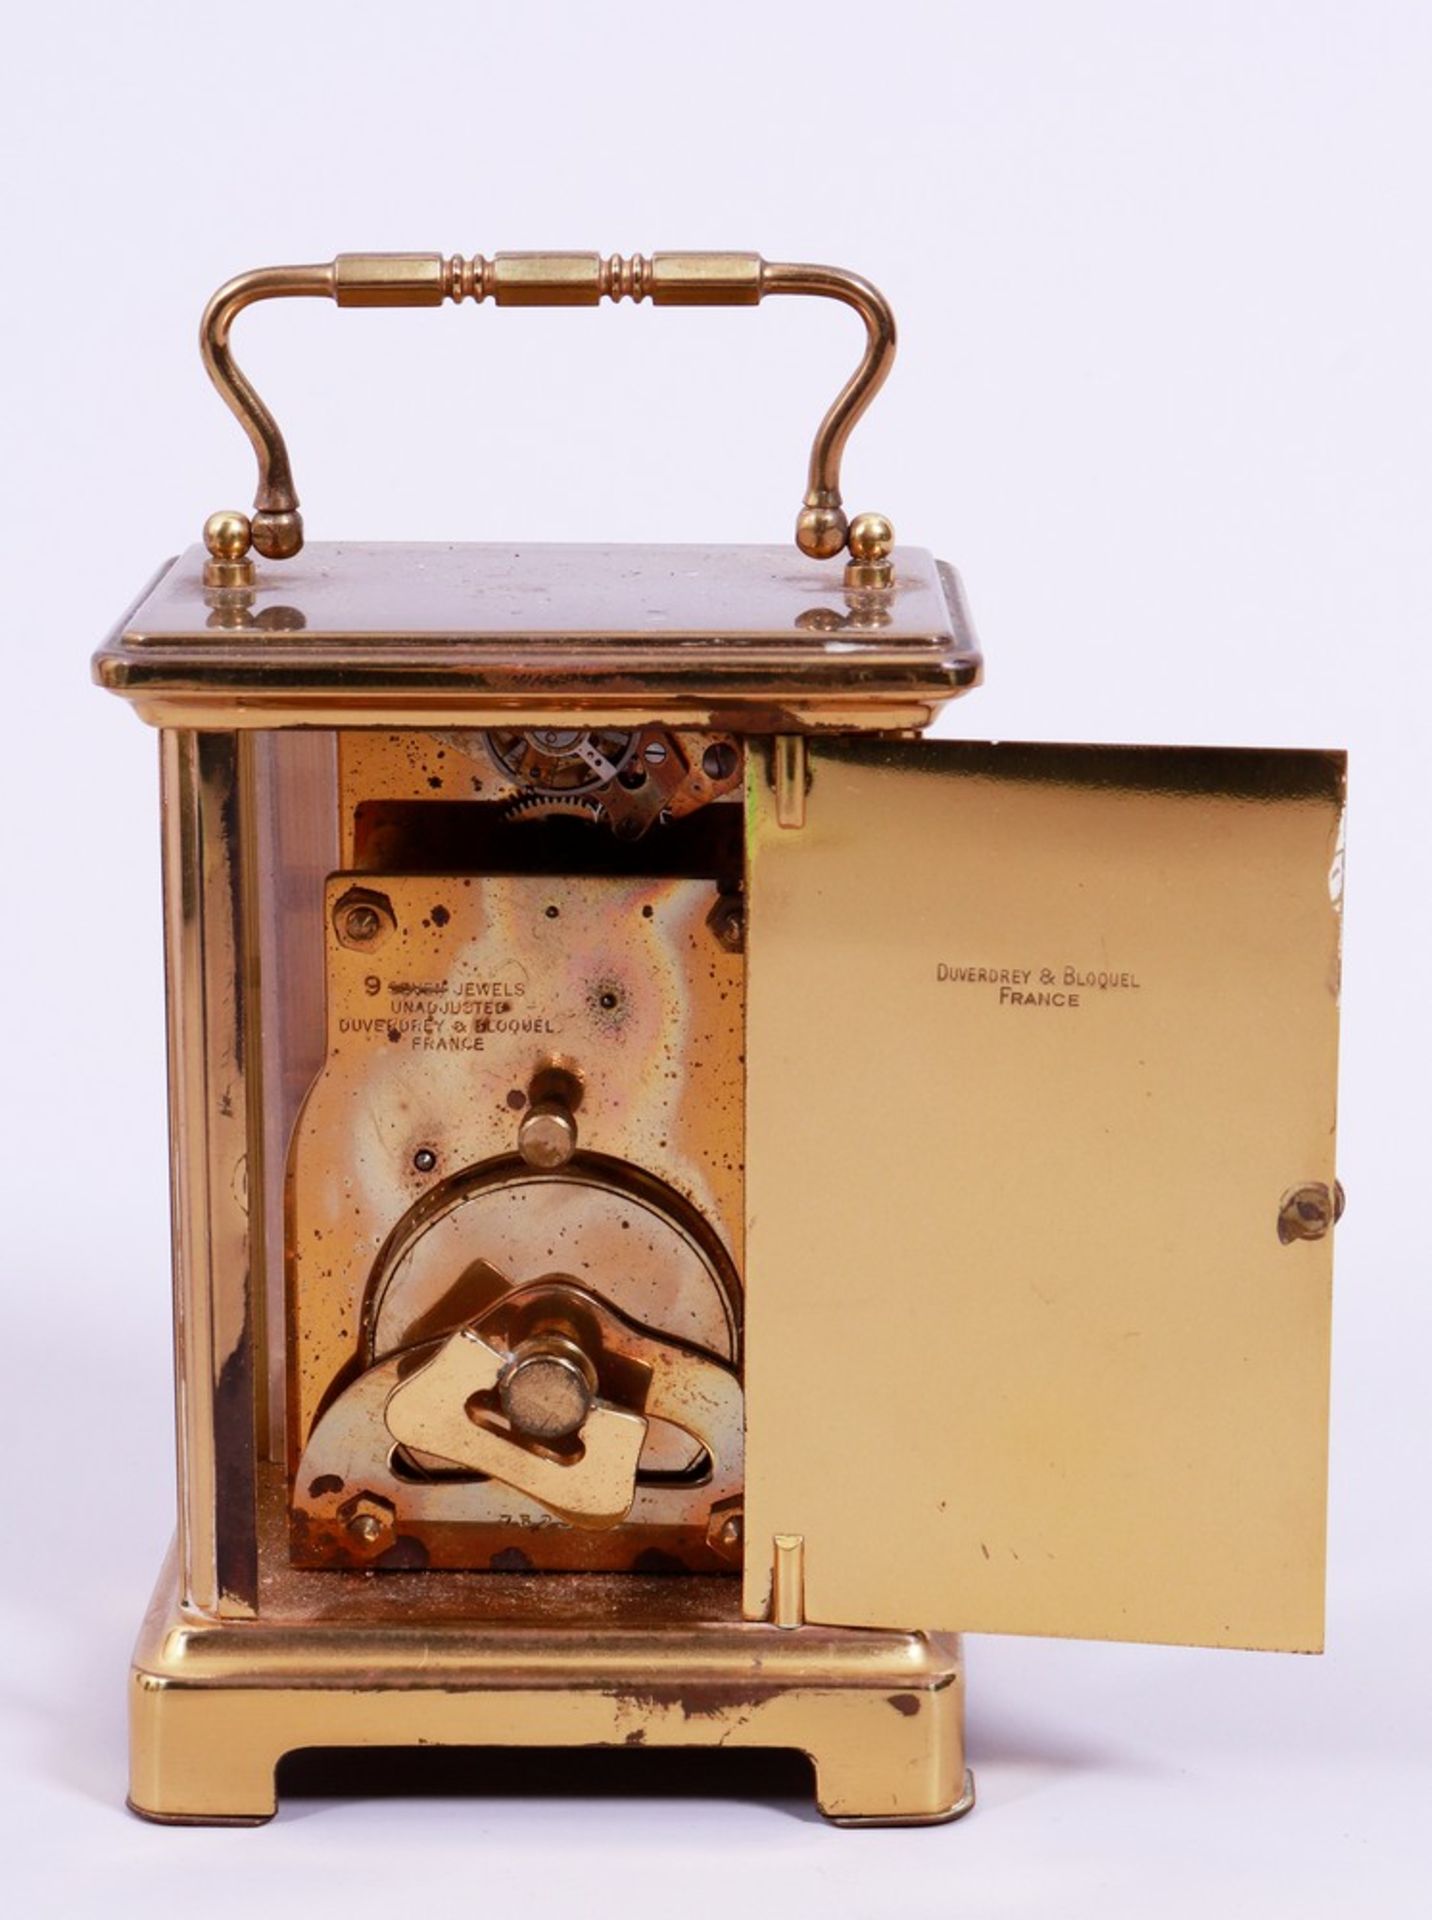 Small carriage clock, Duverdrey & Bloquel Bayard, France, c. 1900/20 - Image 6 of 8